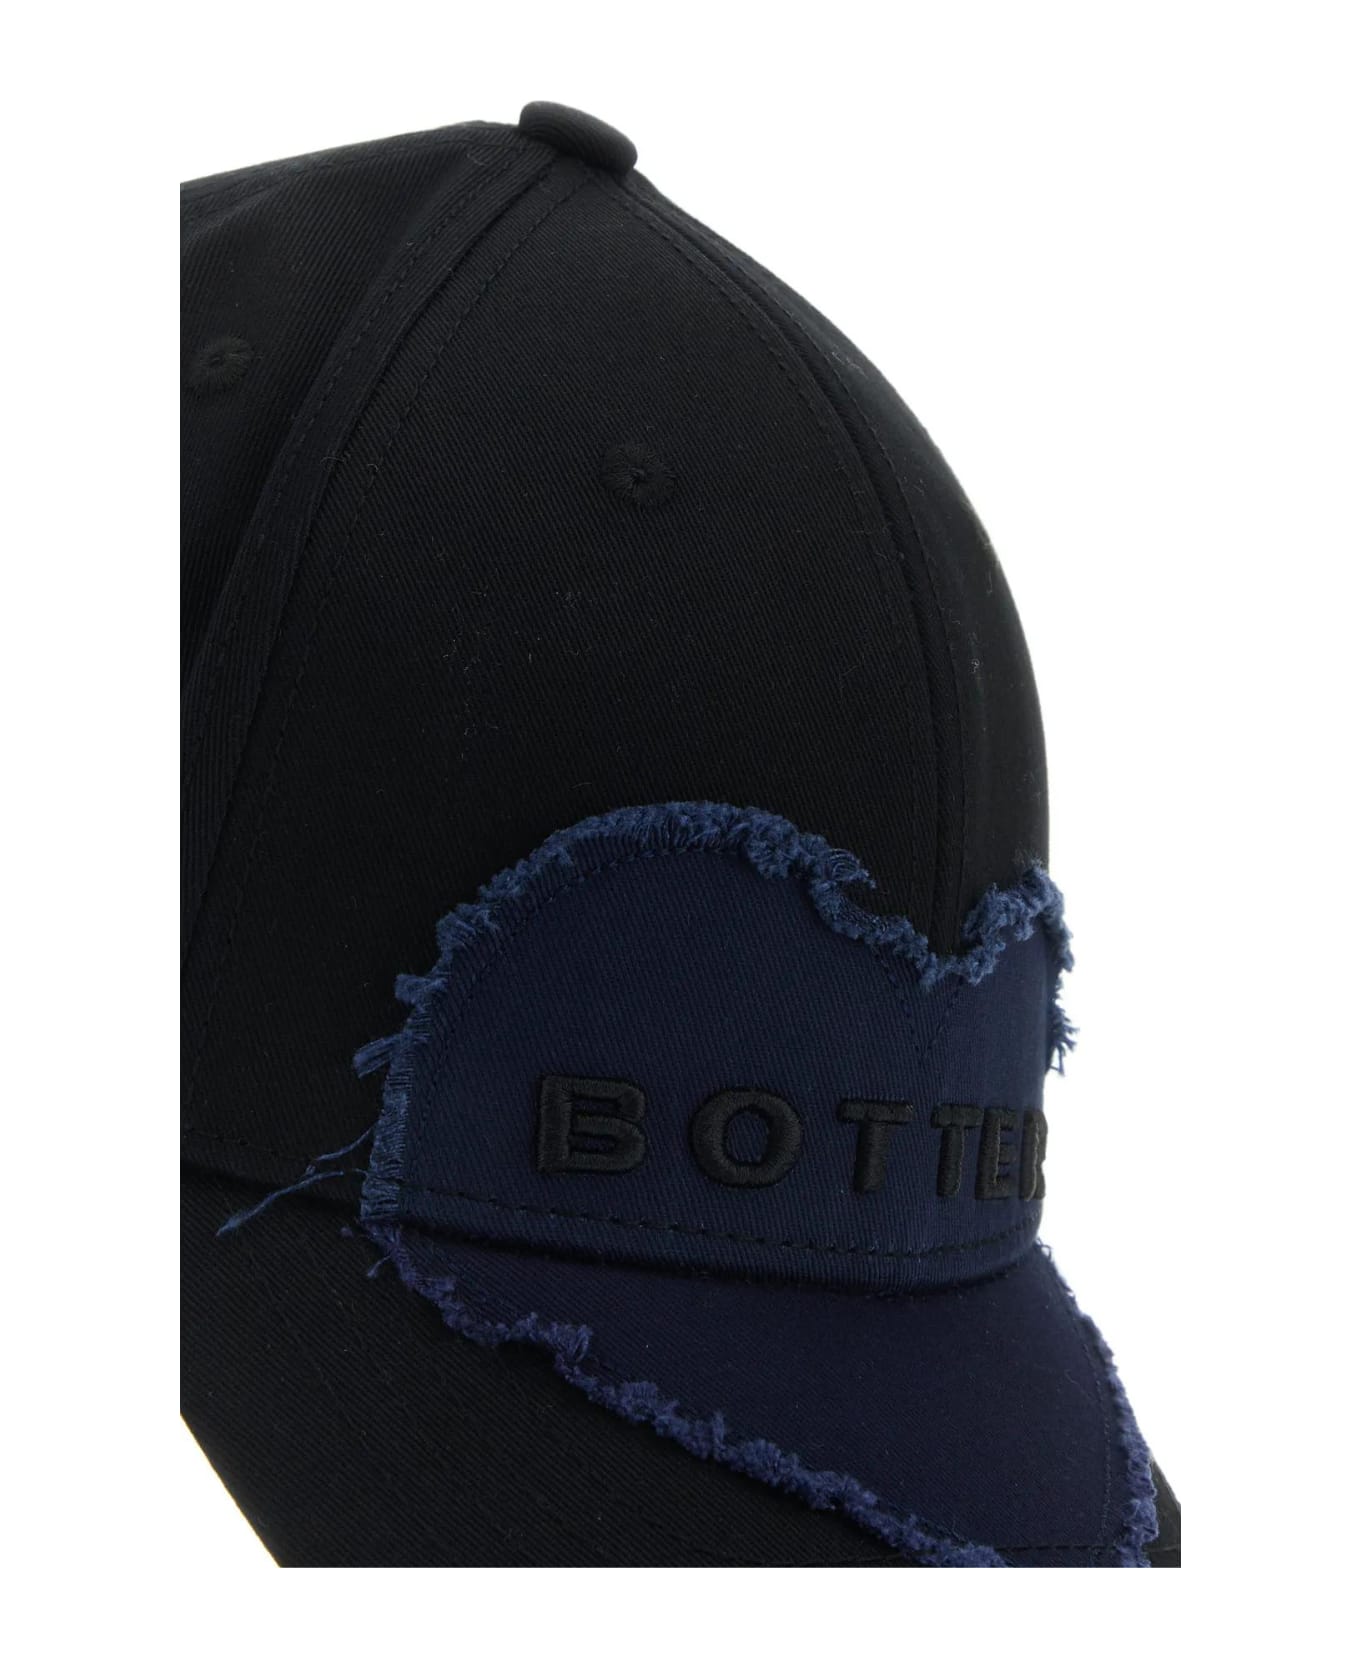 Botter Black Cotton Baseball Cap - Nero